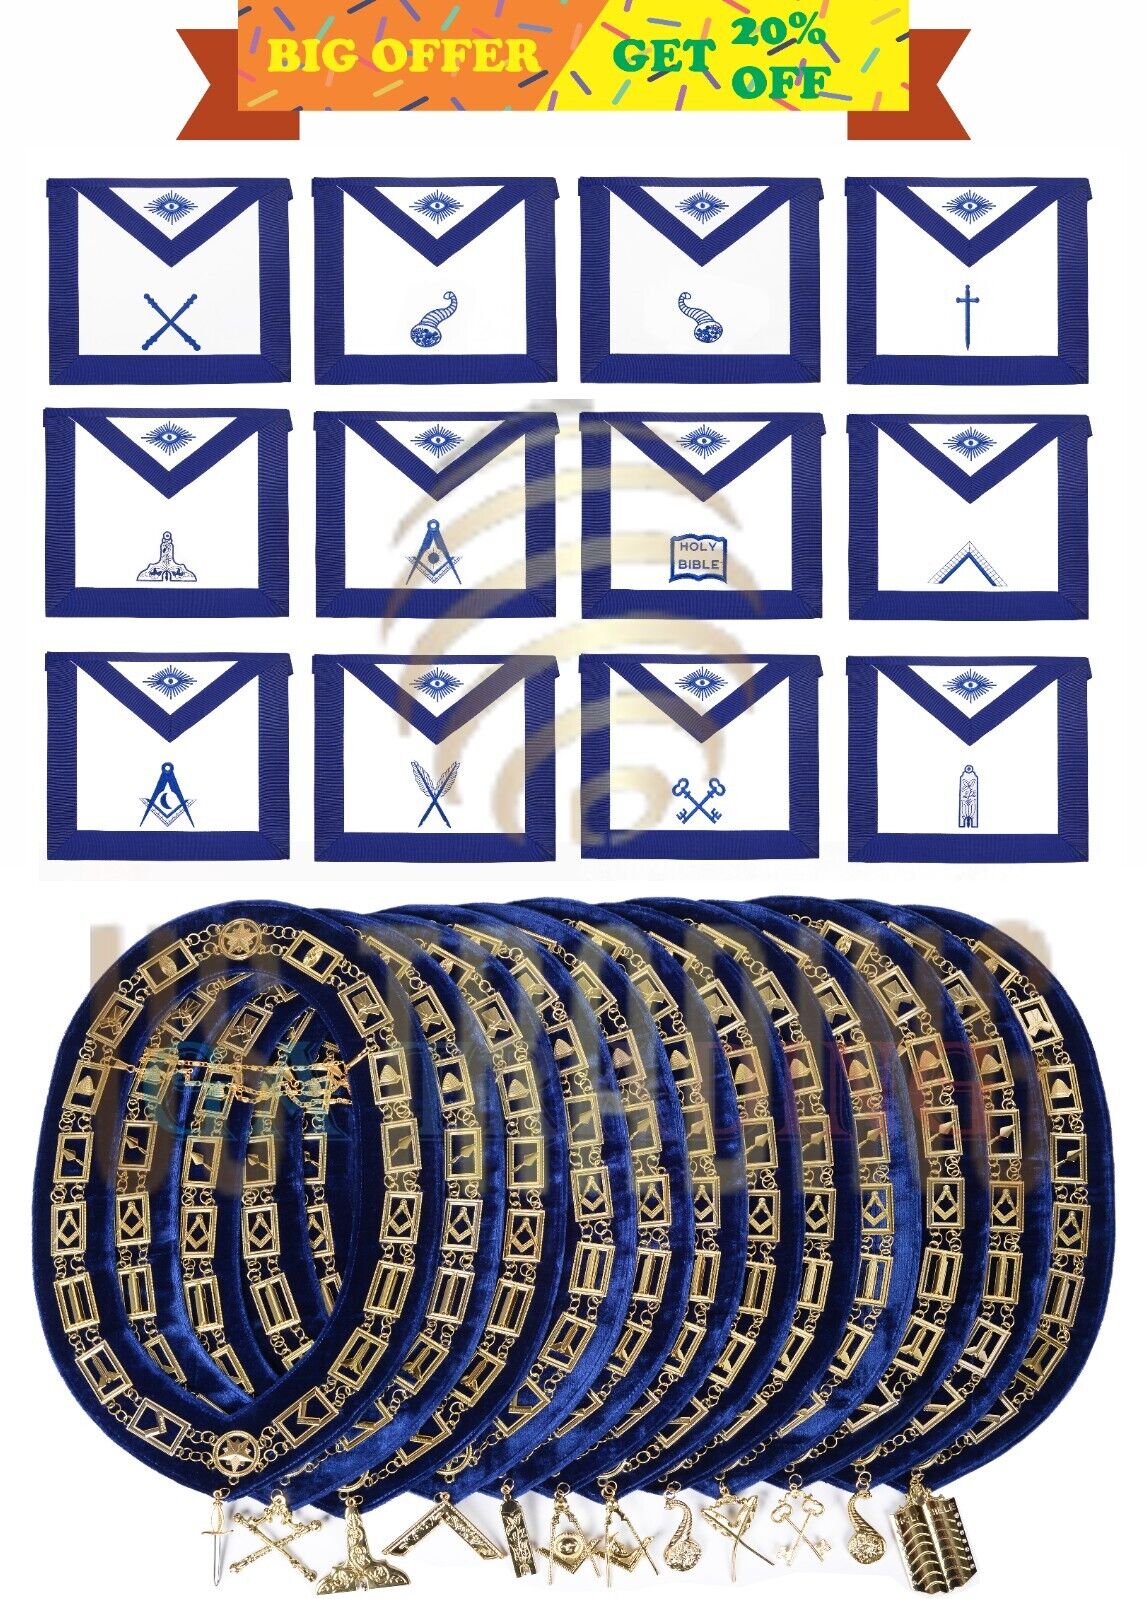 12 Pcs Masonic Freemasons Blue Lodge Aprons & Golden Chain Collar With Jewels